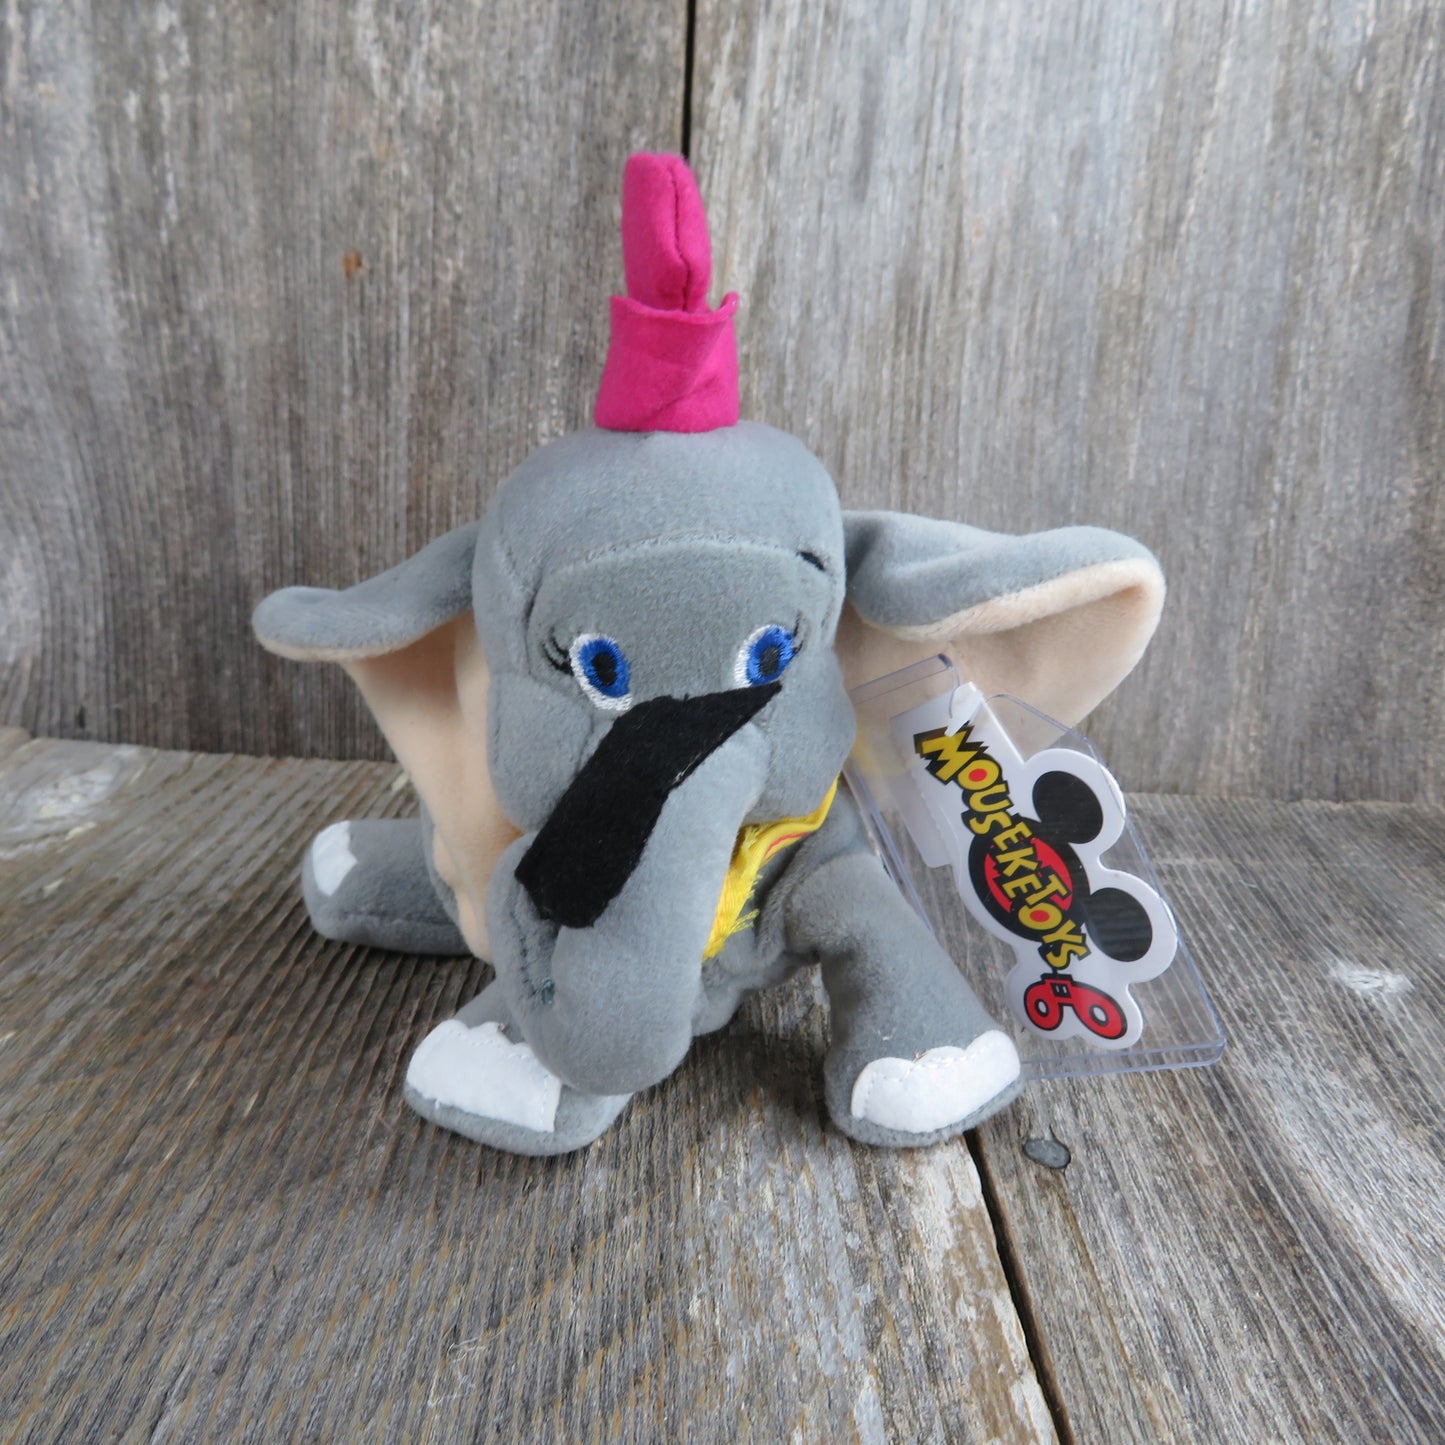 Vintage Dumbo Elephant Plush Beanie Disneyland Mouseketoys Bean Bag Stuffed Animal 1990s - At Grandma's Table